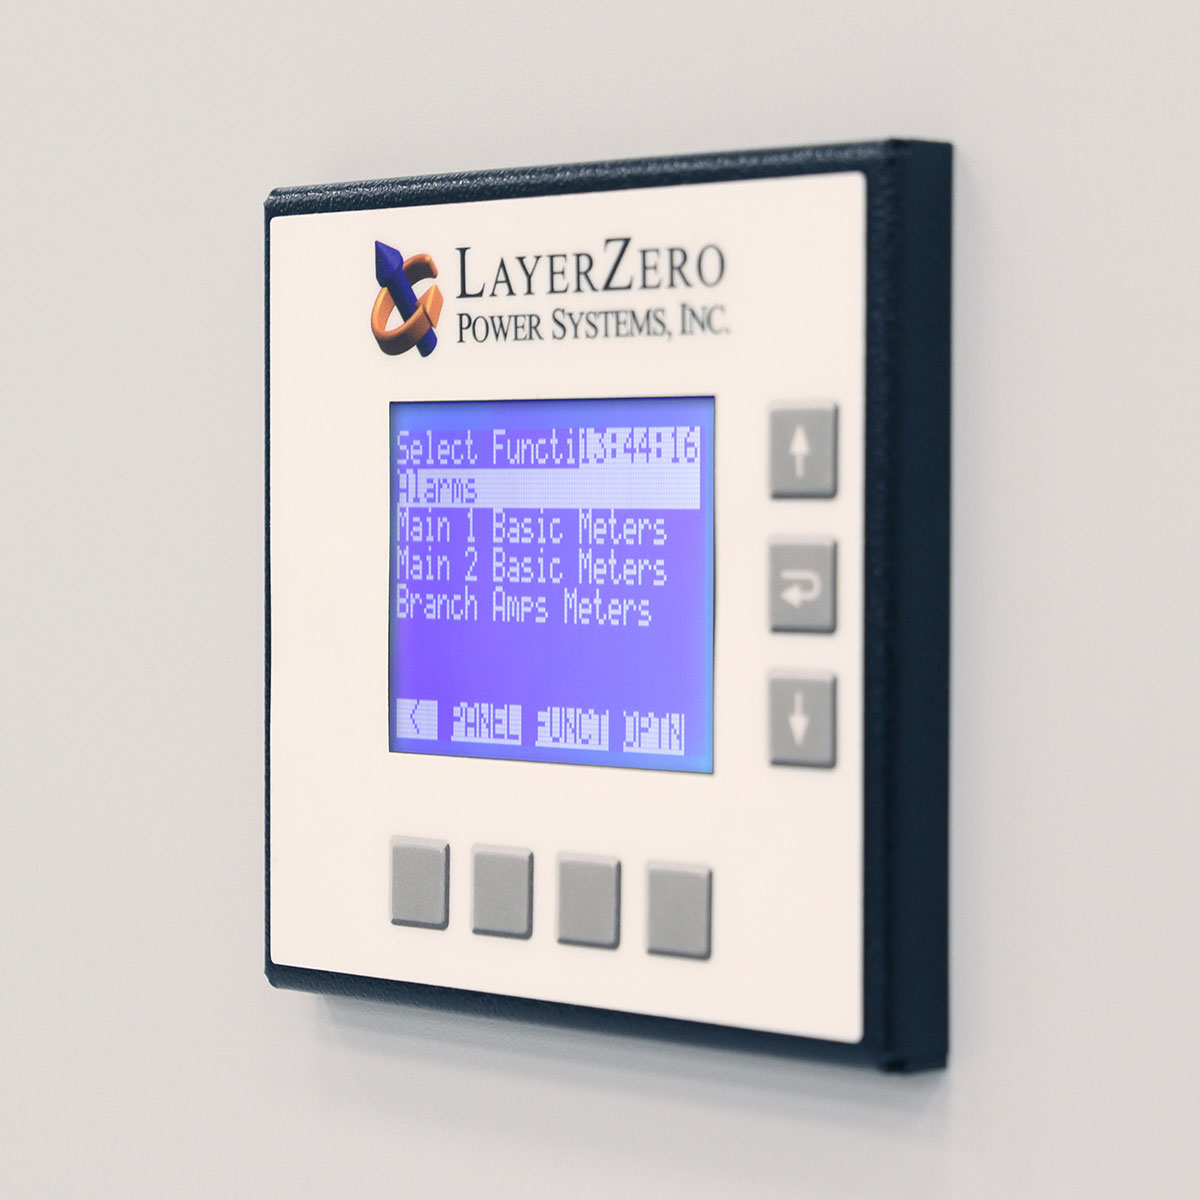 The LayerZero Series 70: ePanel-1 Compact Local LCD Display.